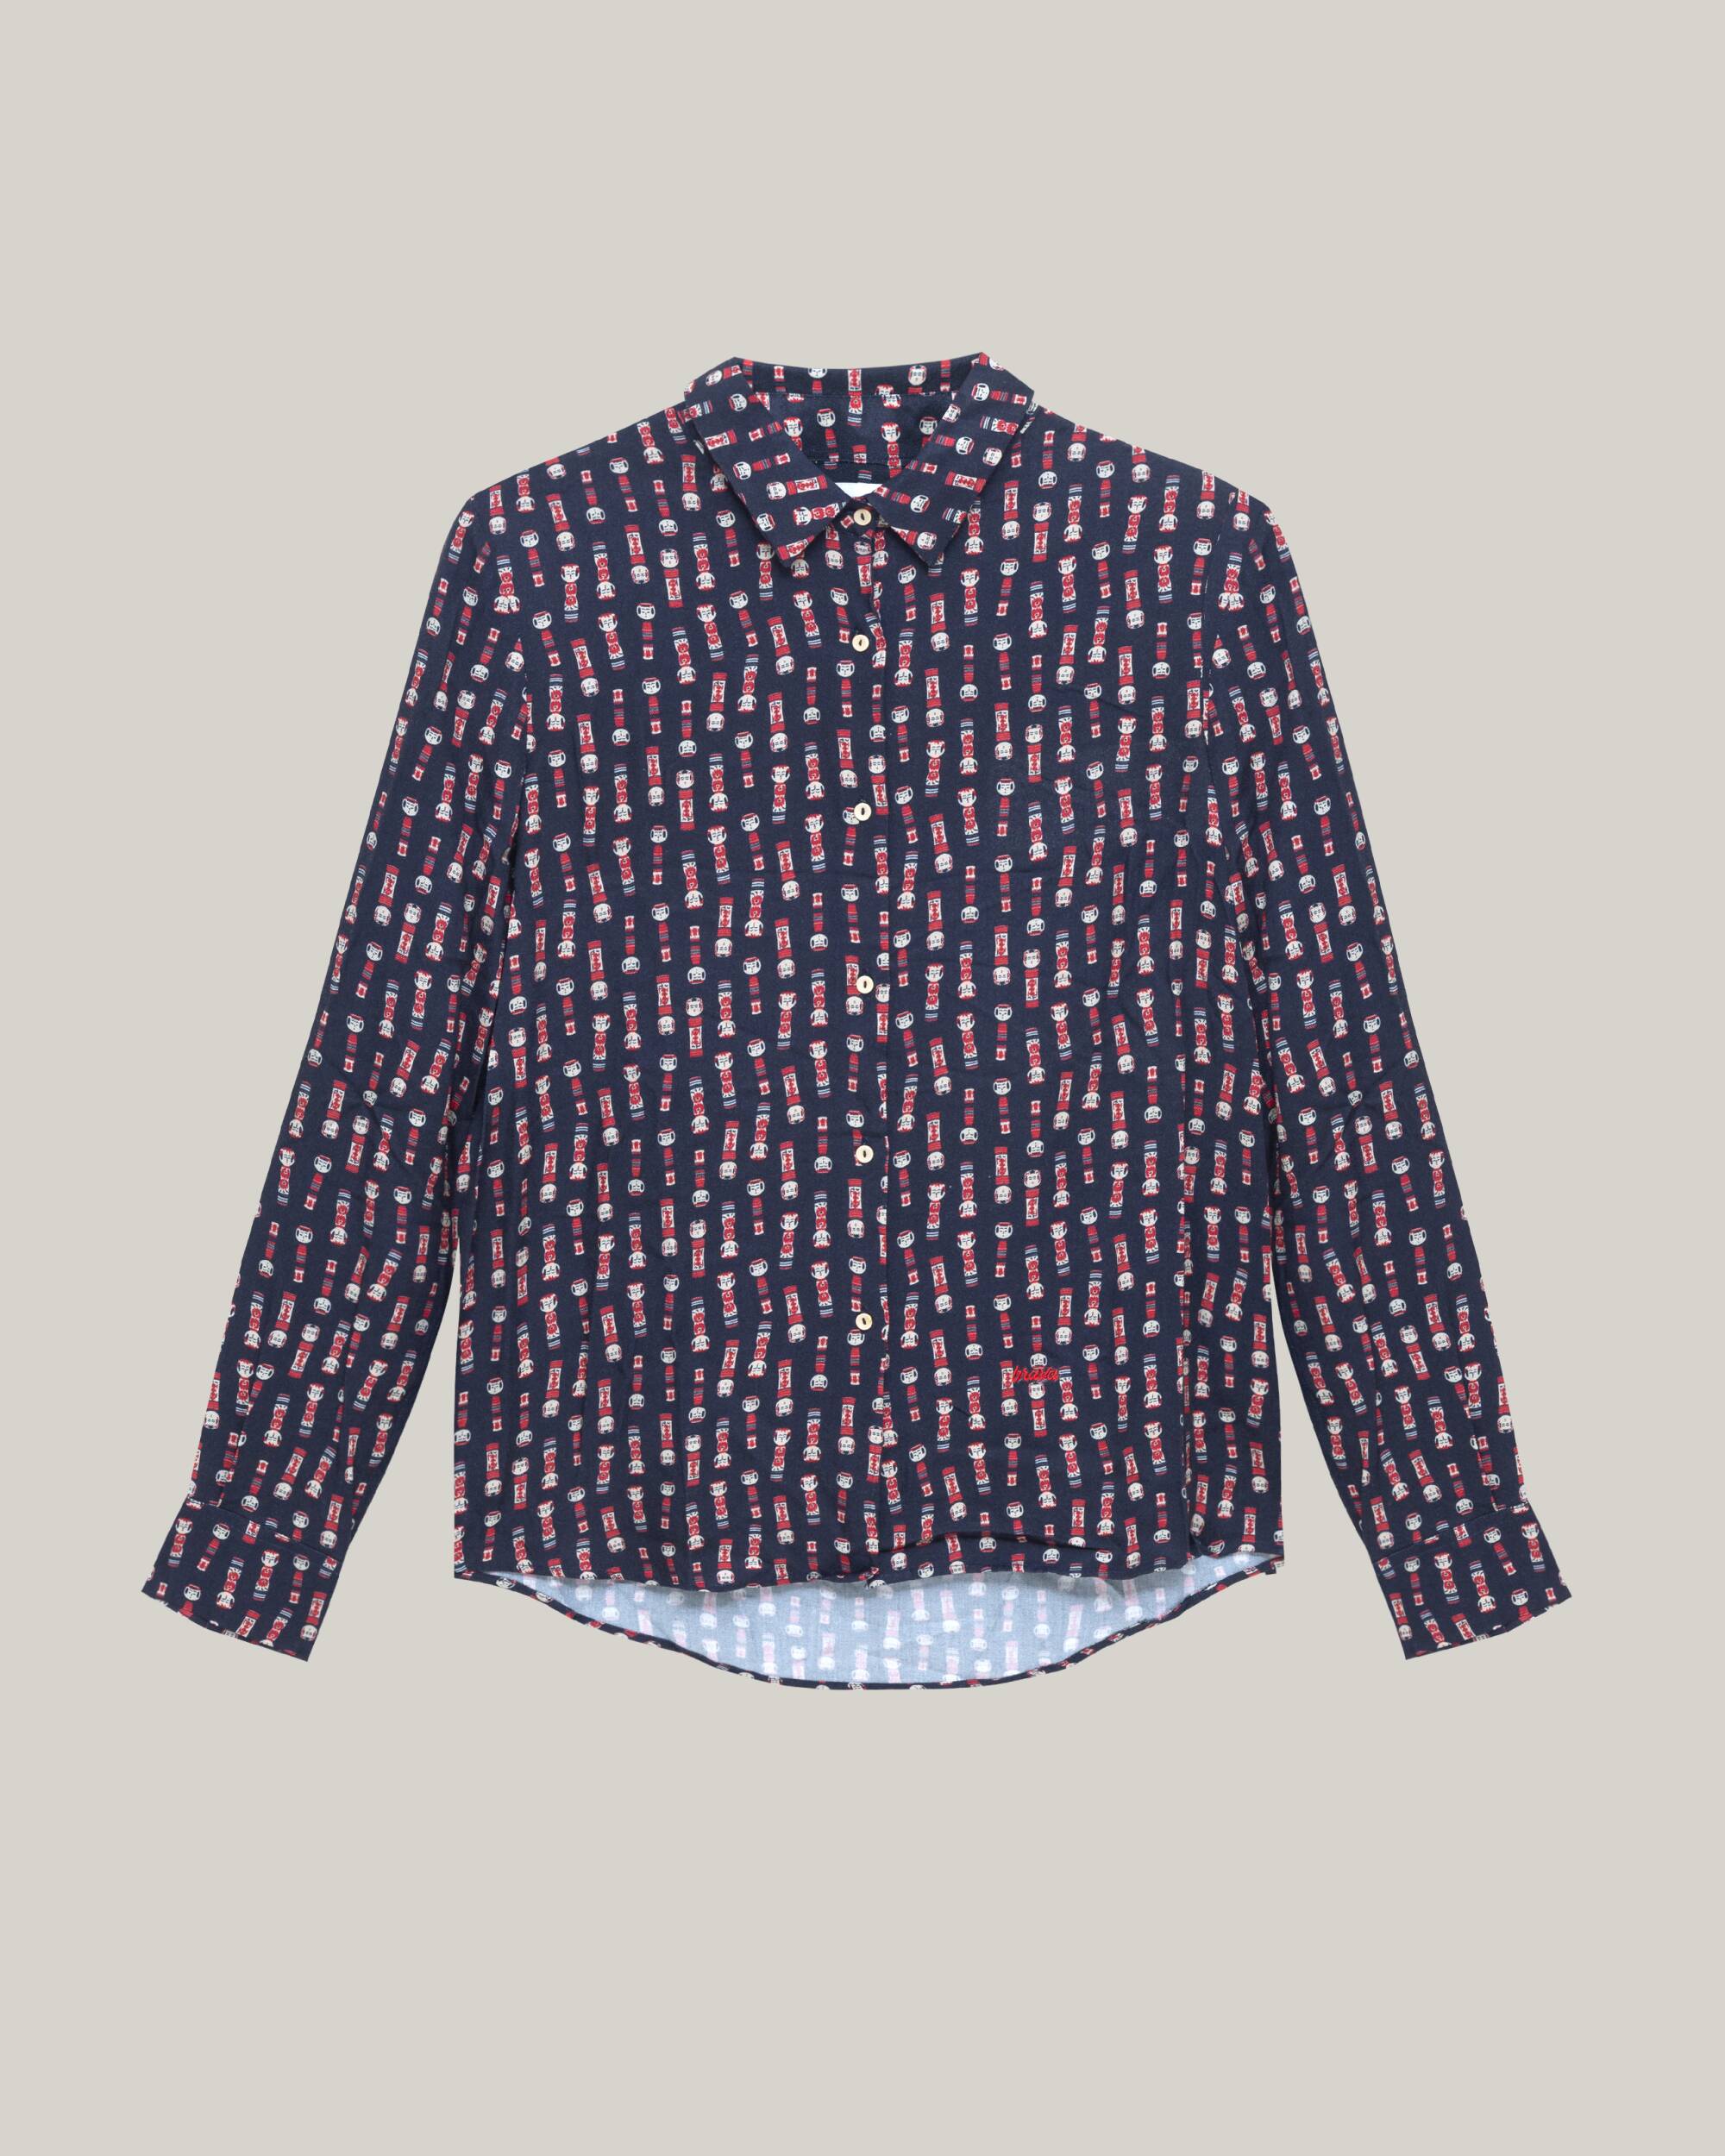 Colorful, long-sleeved viscose Kokeshi blouse from Brava Fabrics